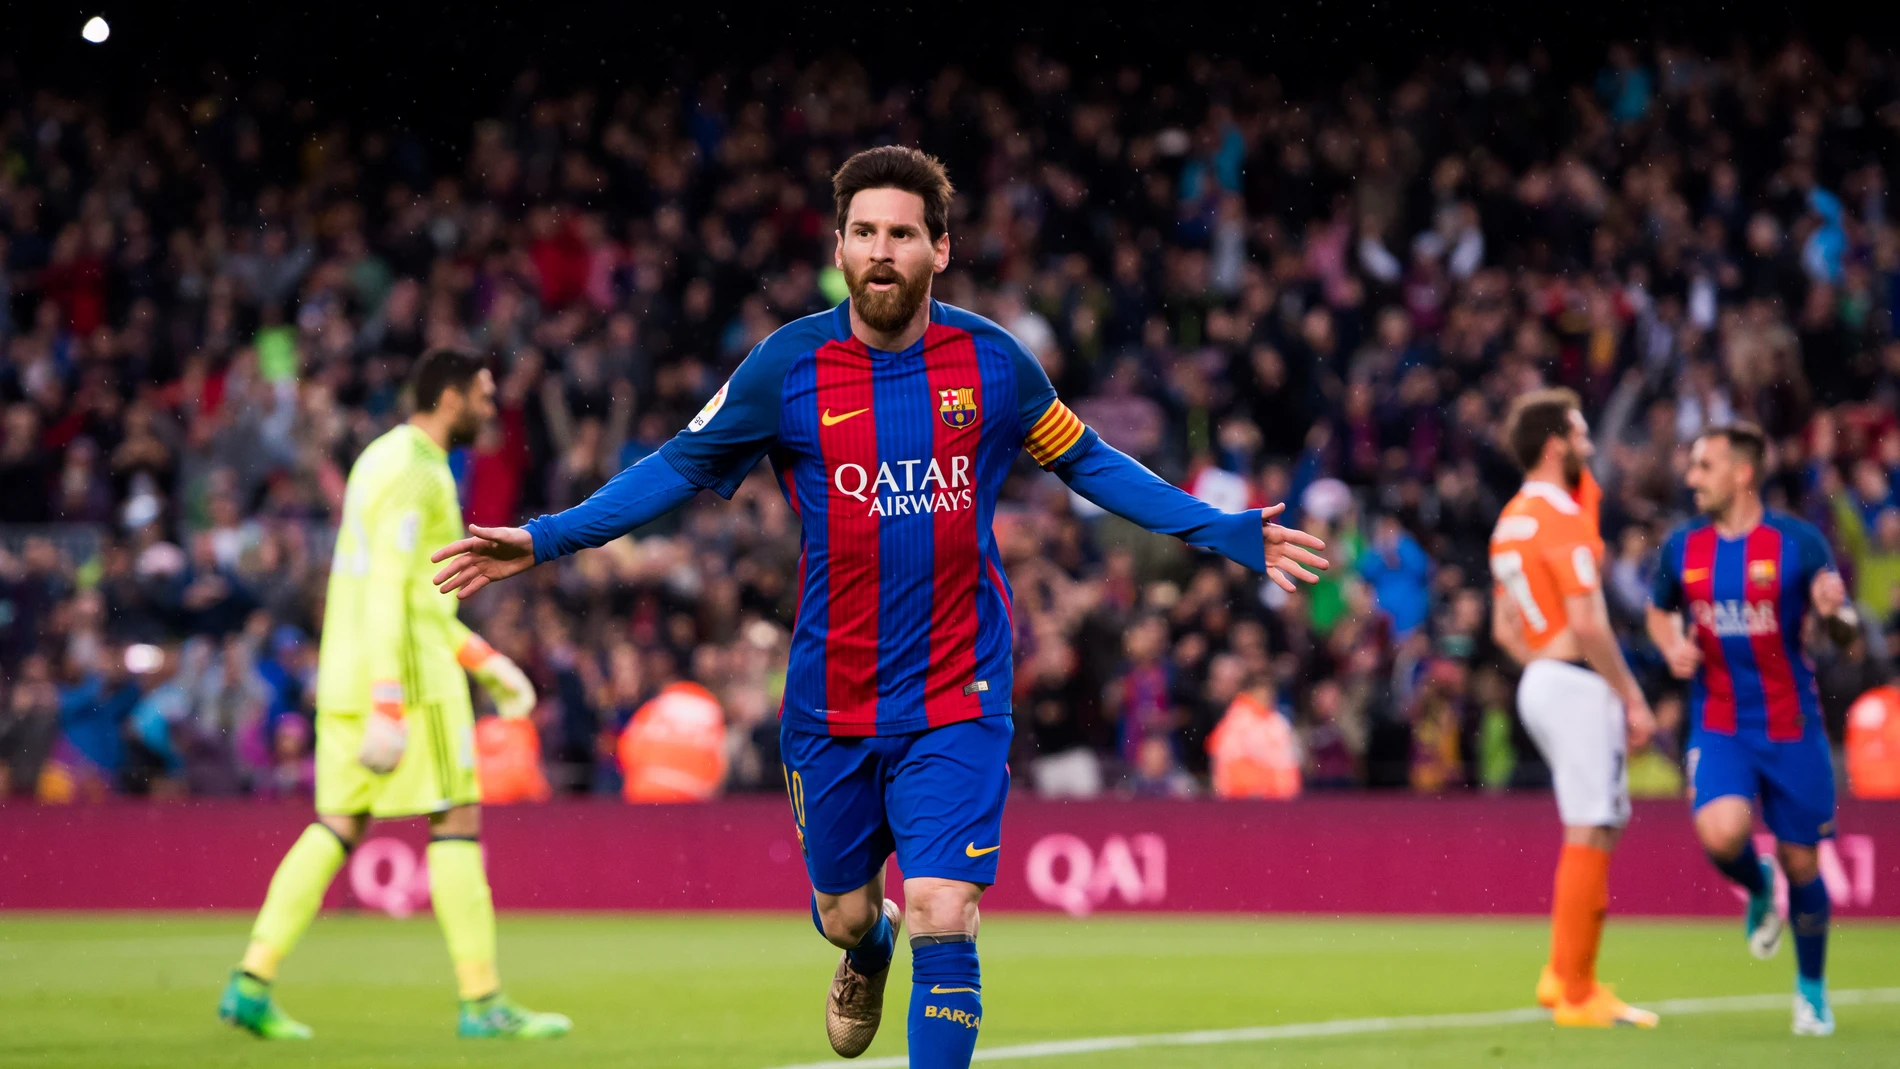 Leo Messi celebra el 1-0 ante Osasuna